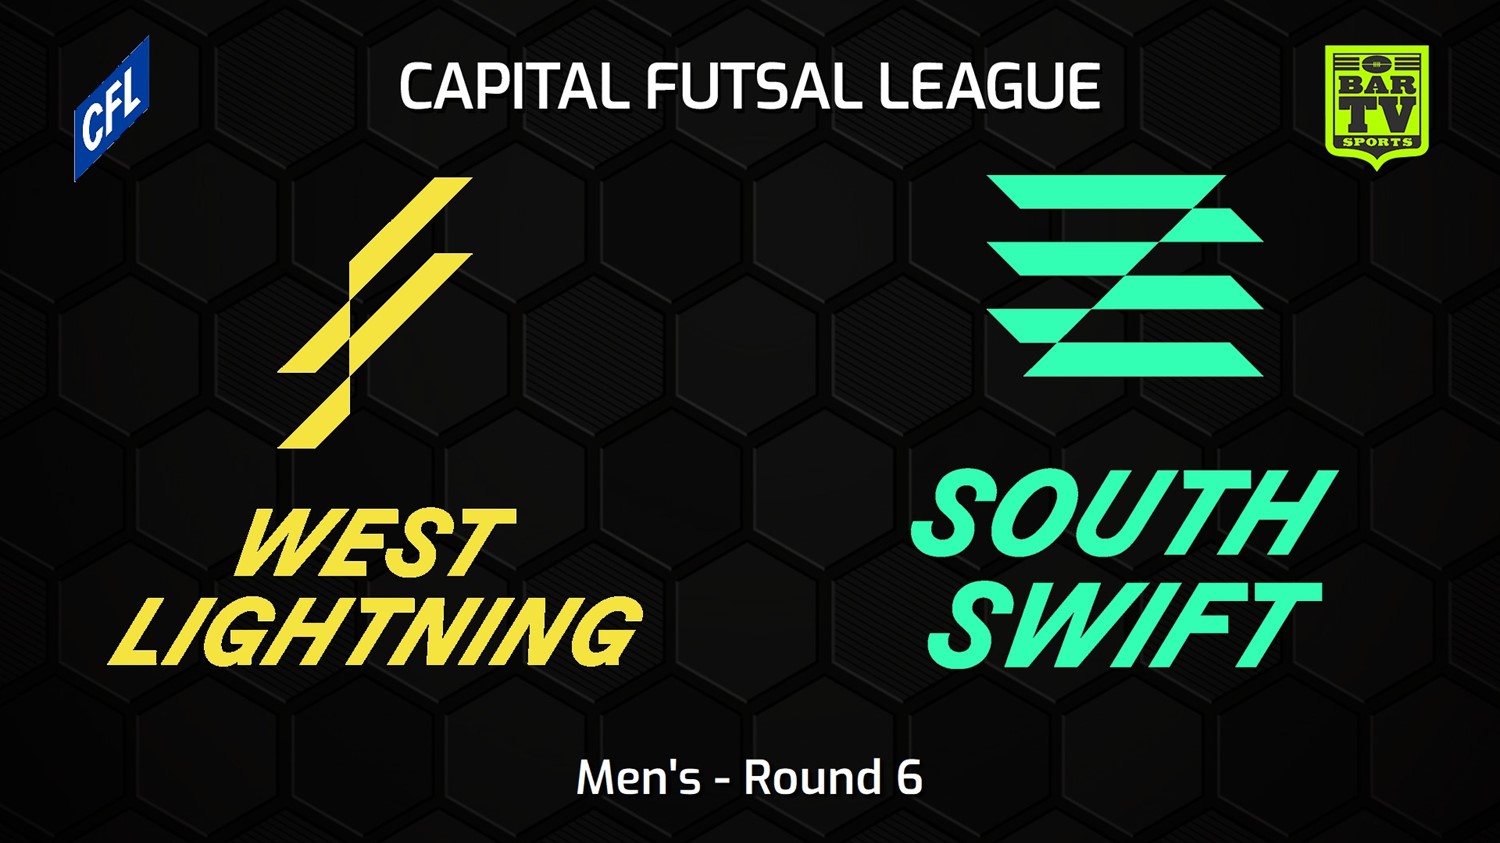 240121-Capital Football Futsal Round 6 - Men's - West Canberra Lightning v South Canberra Swift Minigame Slate Image